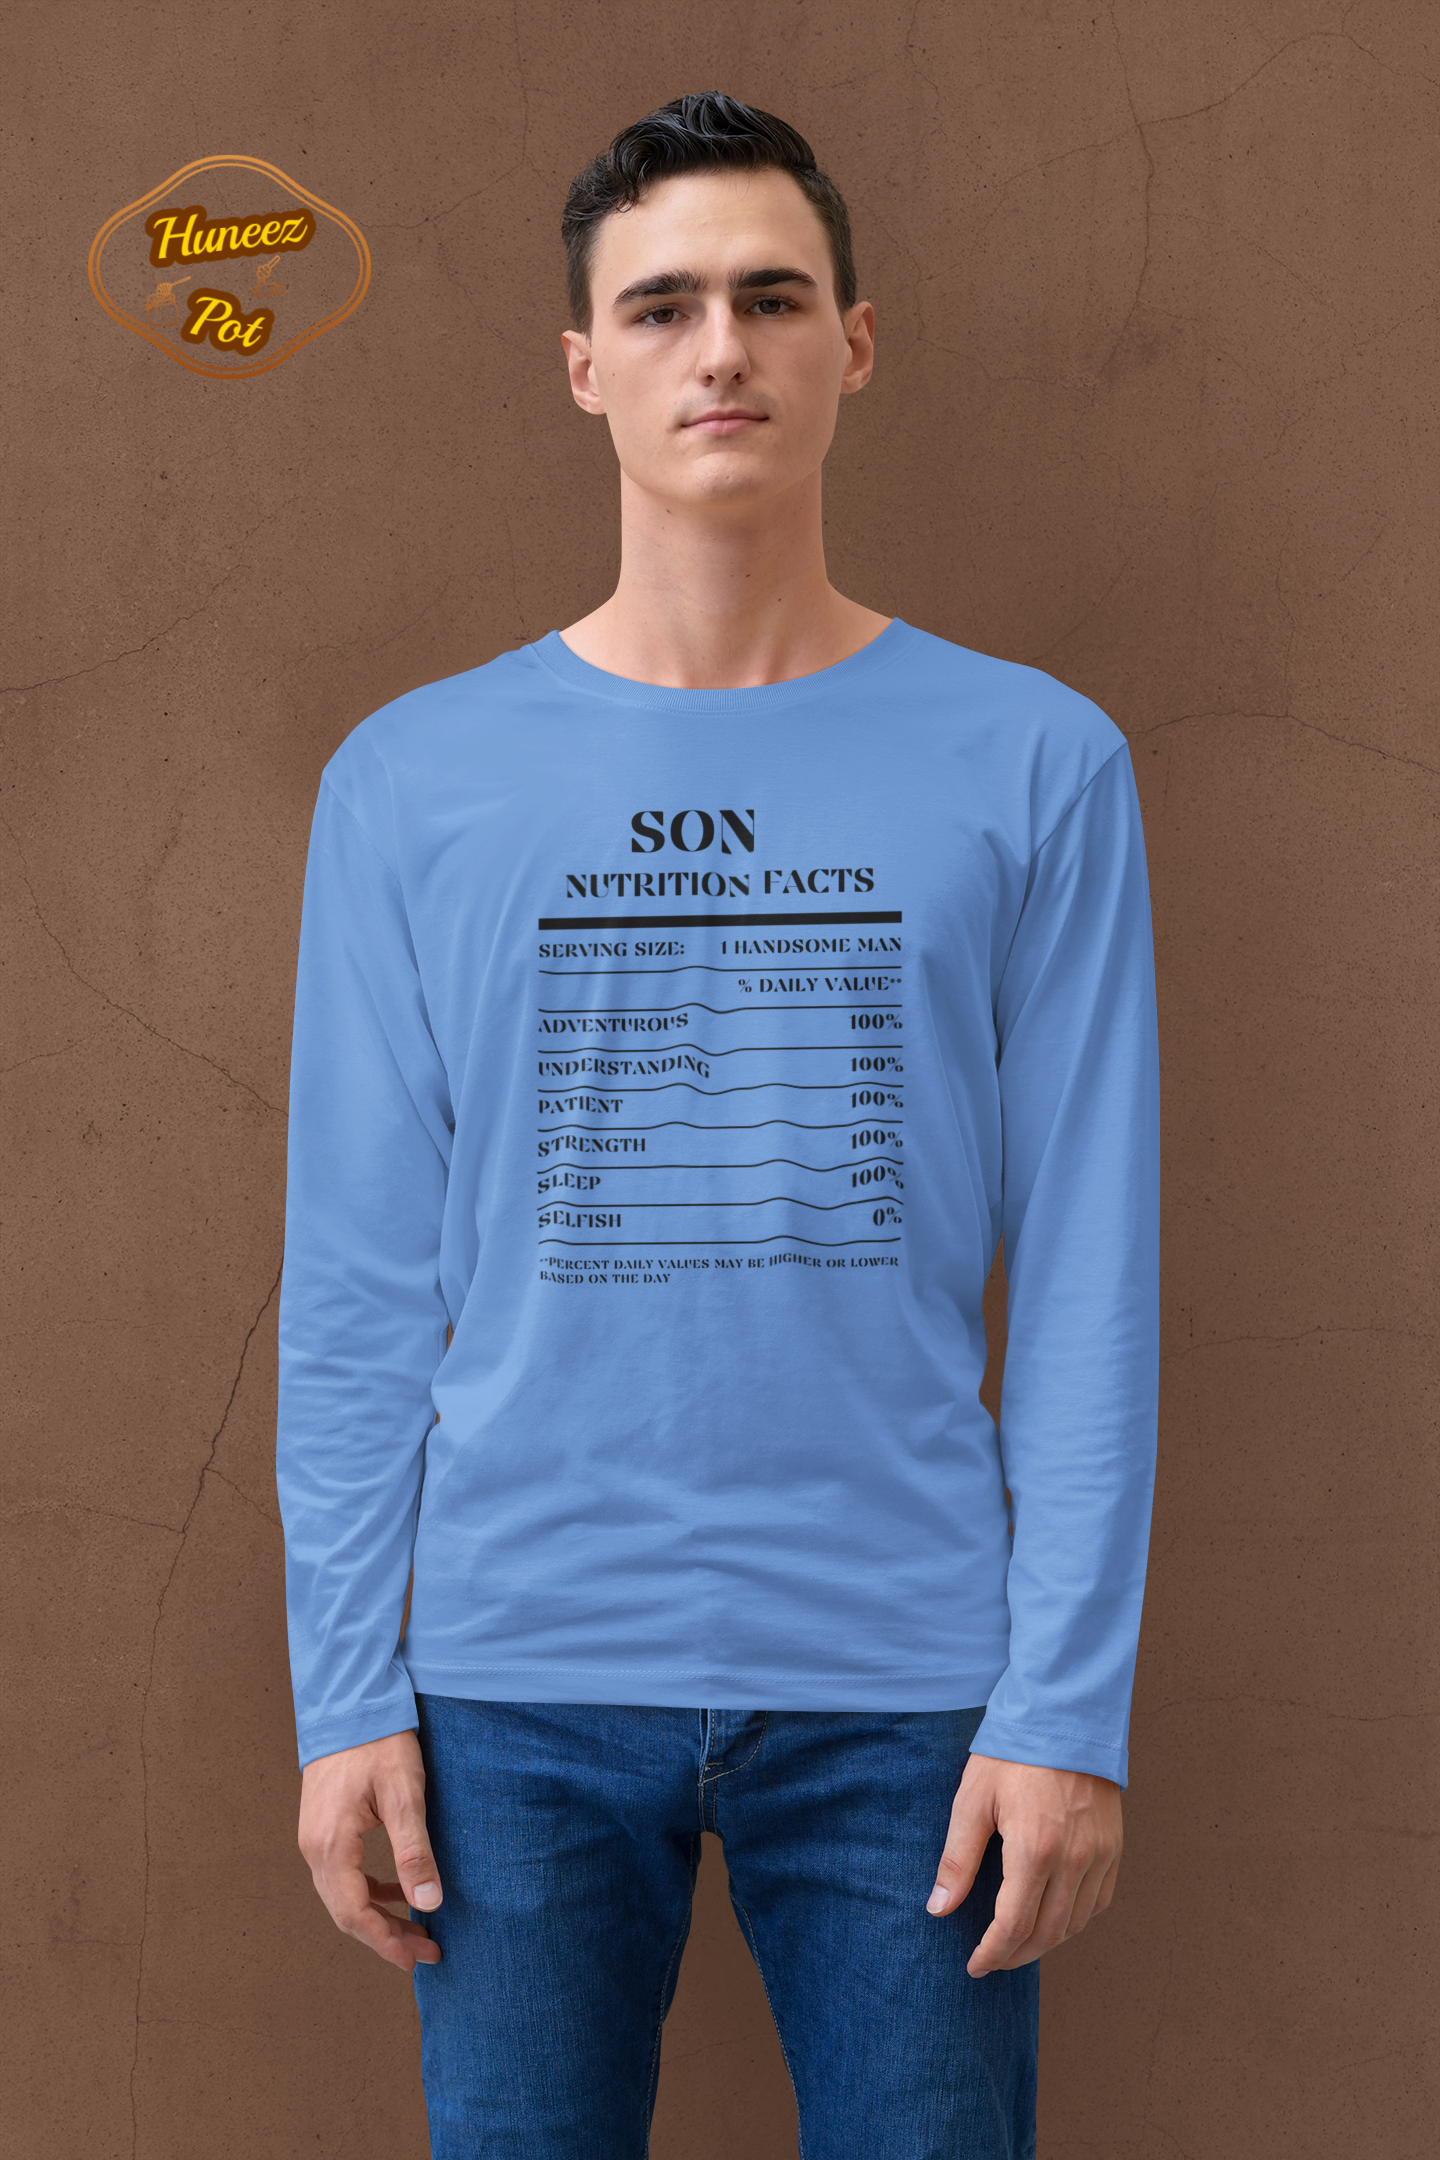 Nutrition Facts T-Shirt LS - Son - Black